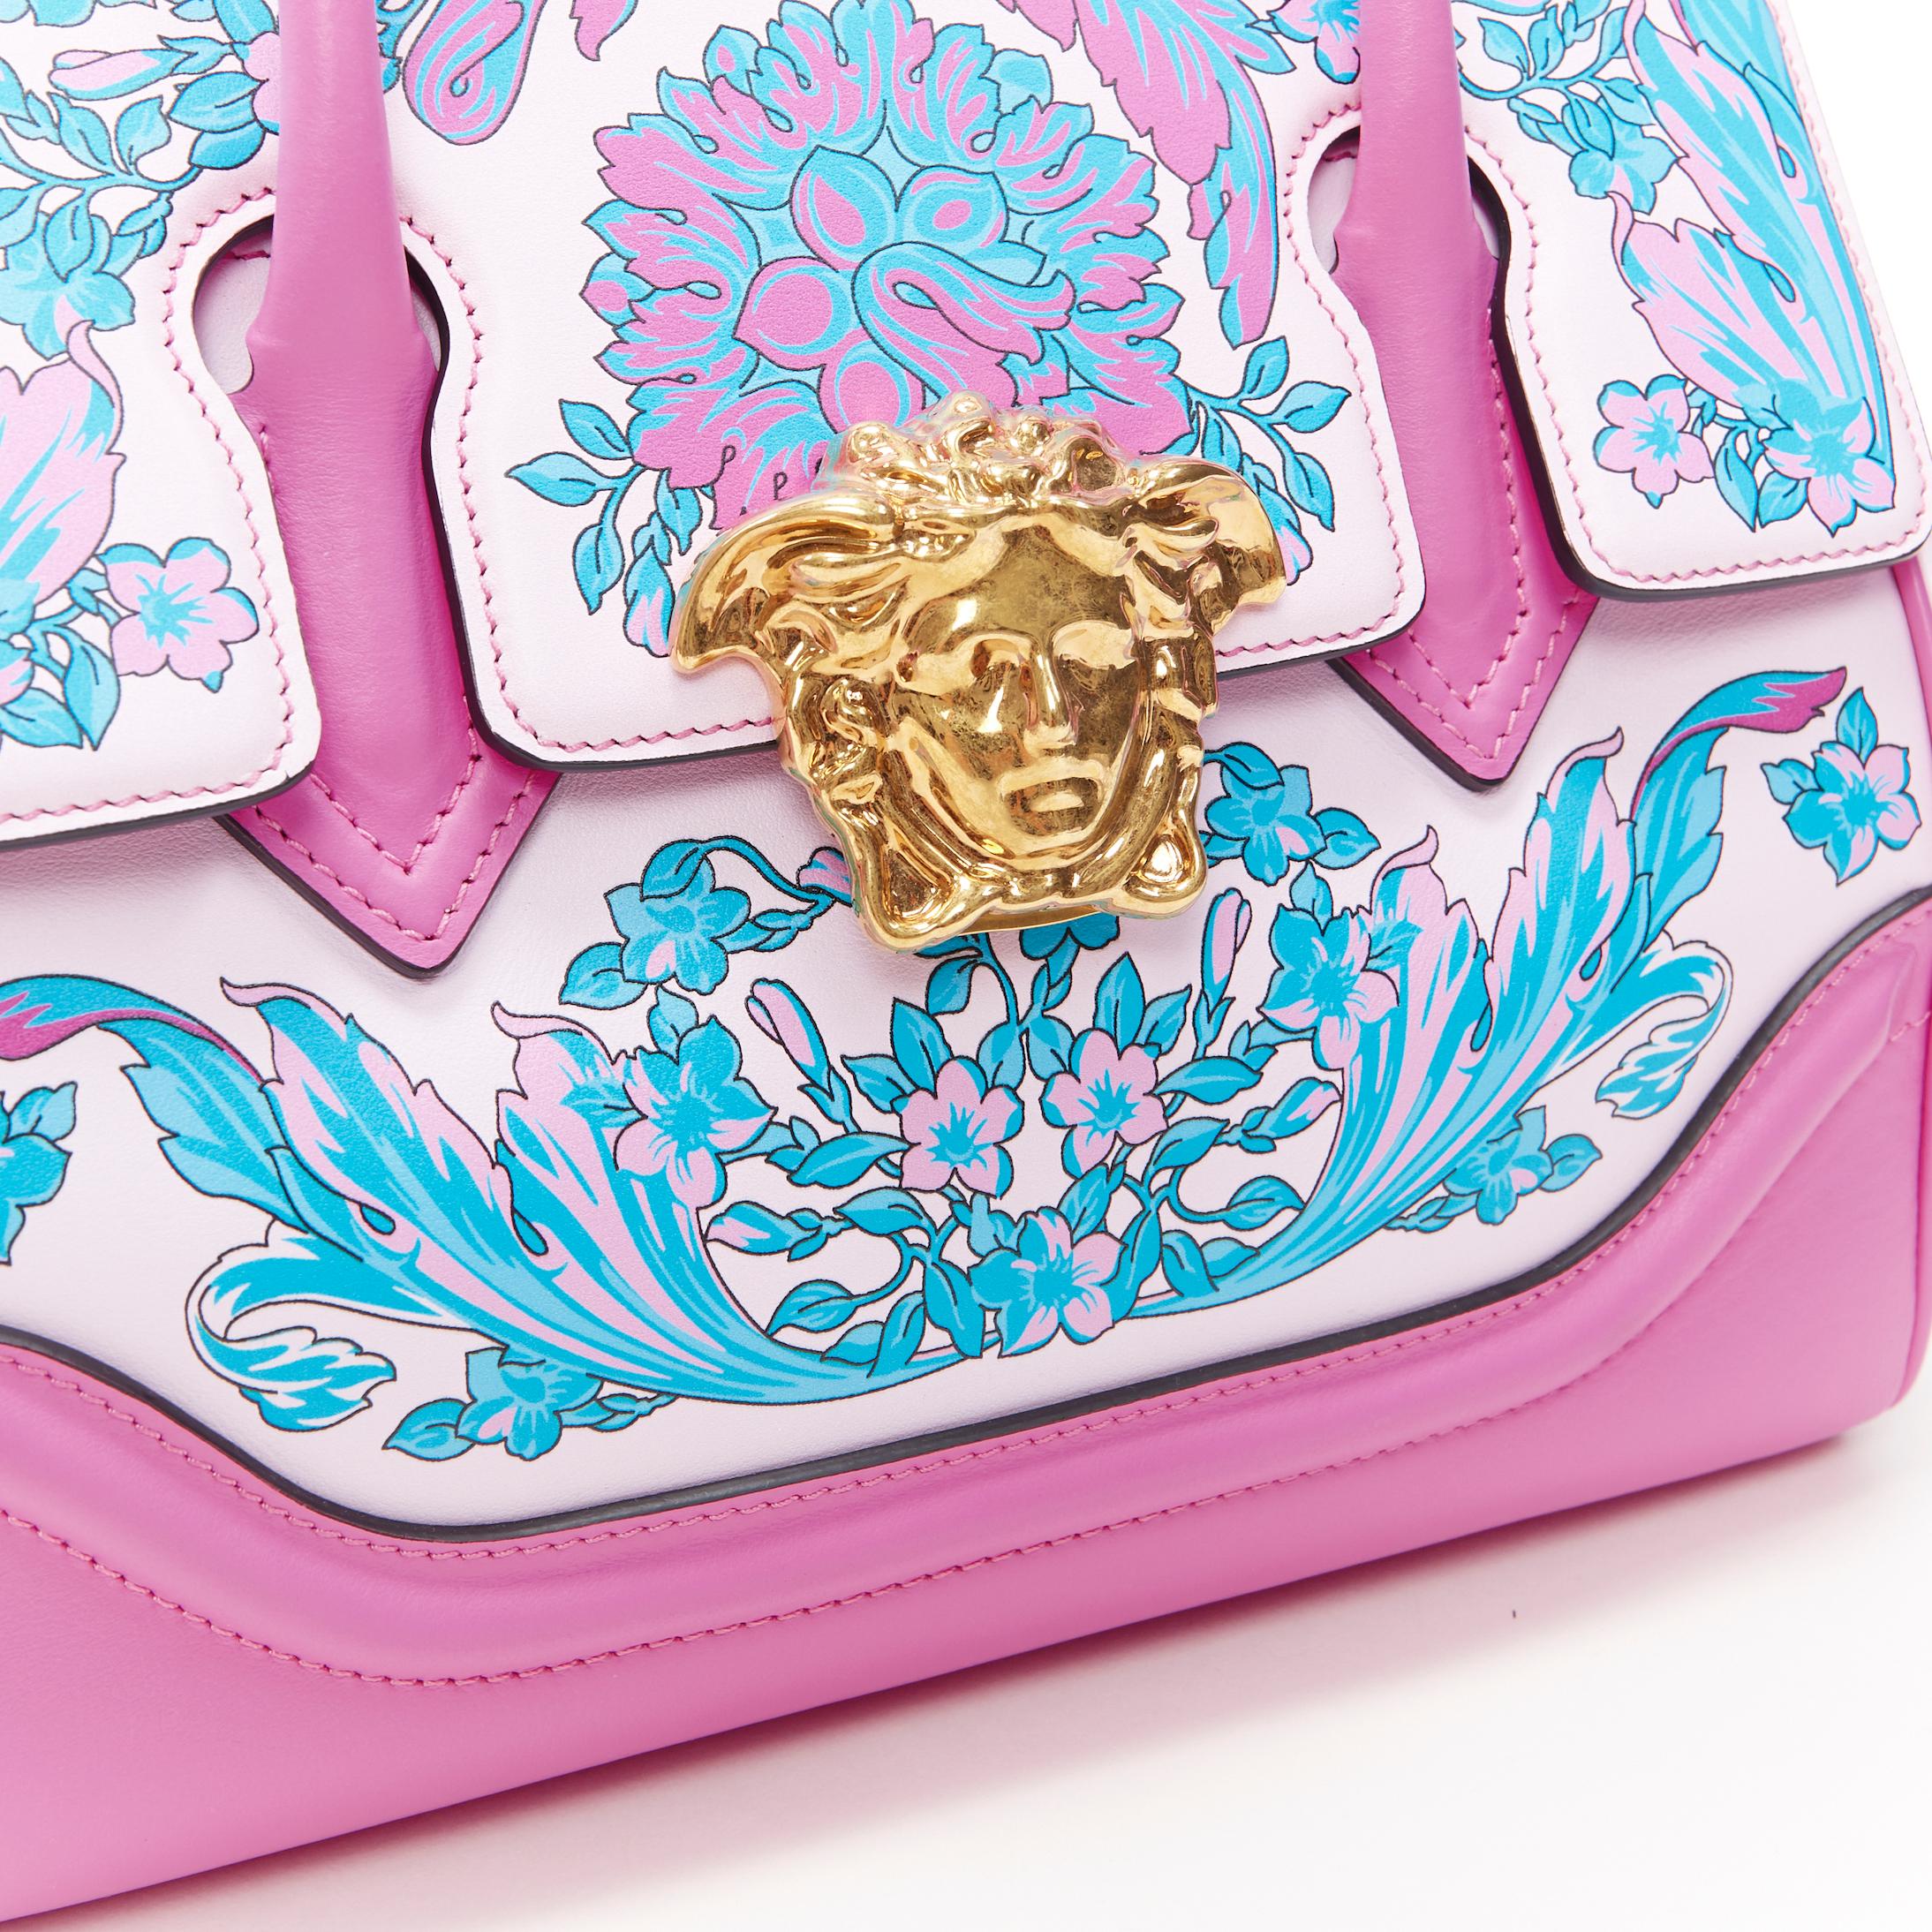 Women's new VERSACE 2019 Palazzo Empire Small Technicolor Baroque pink Medusa bag